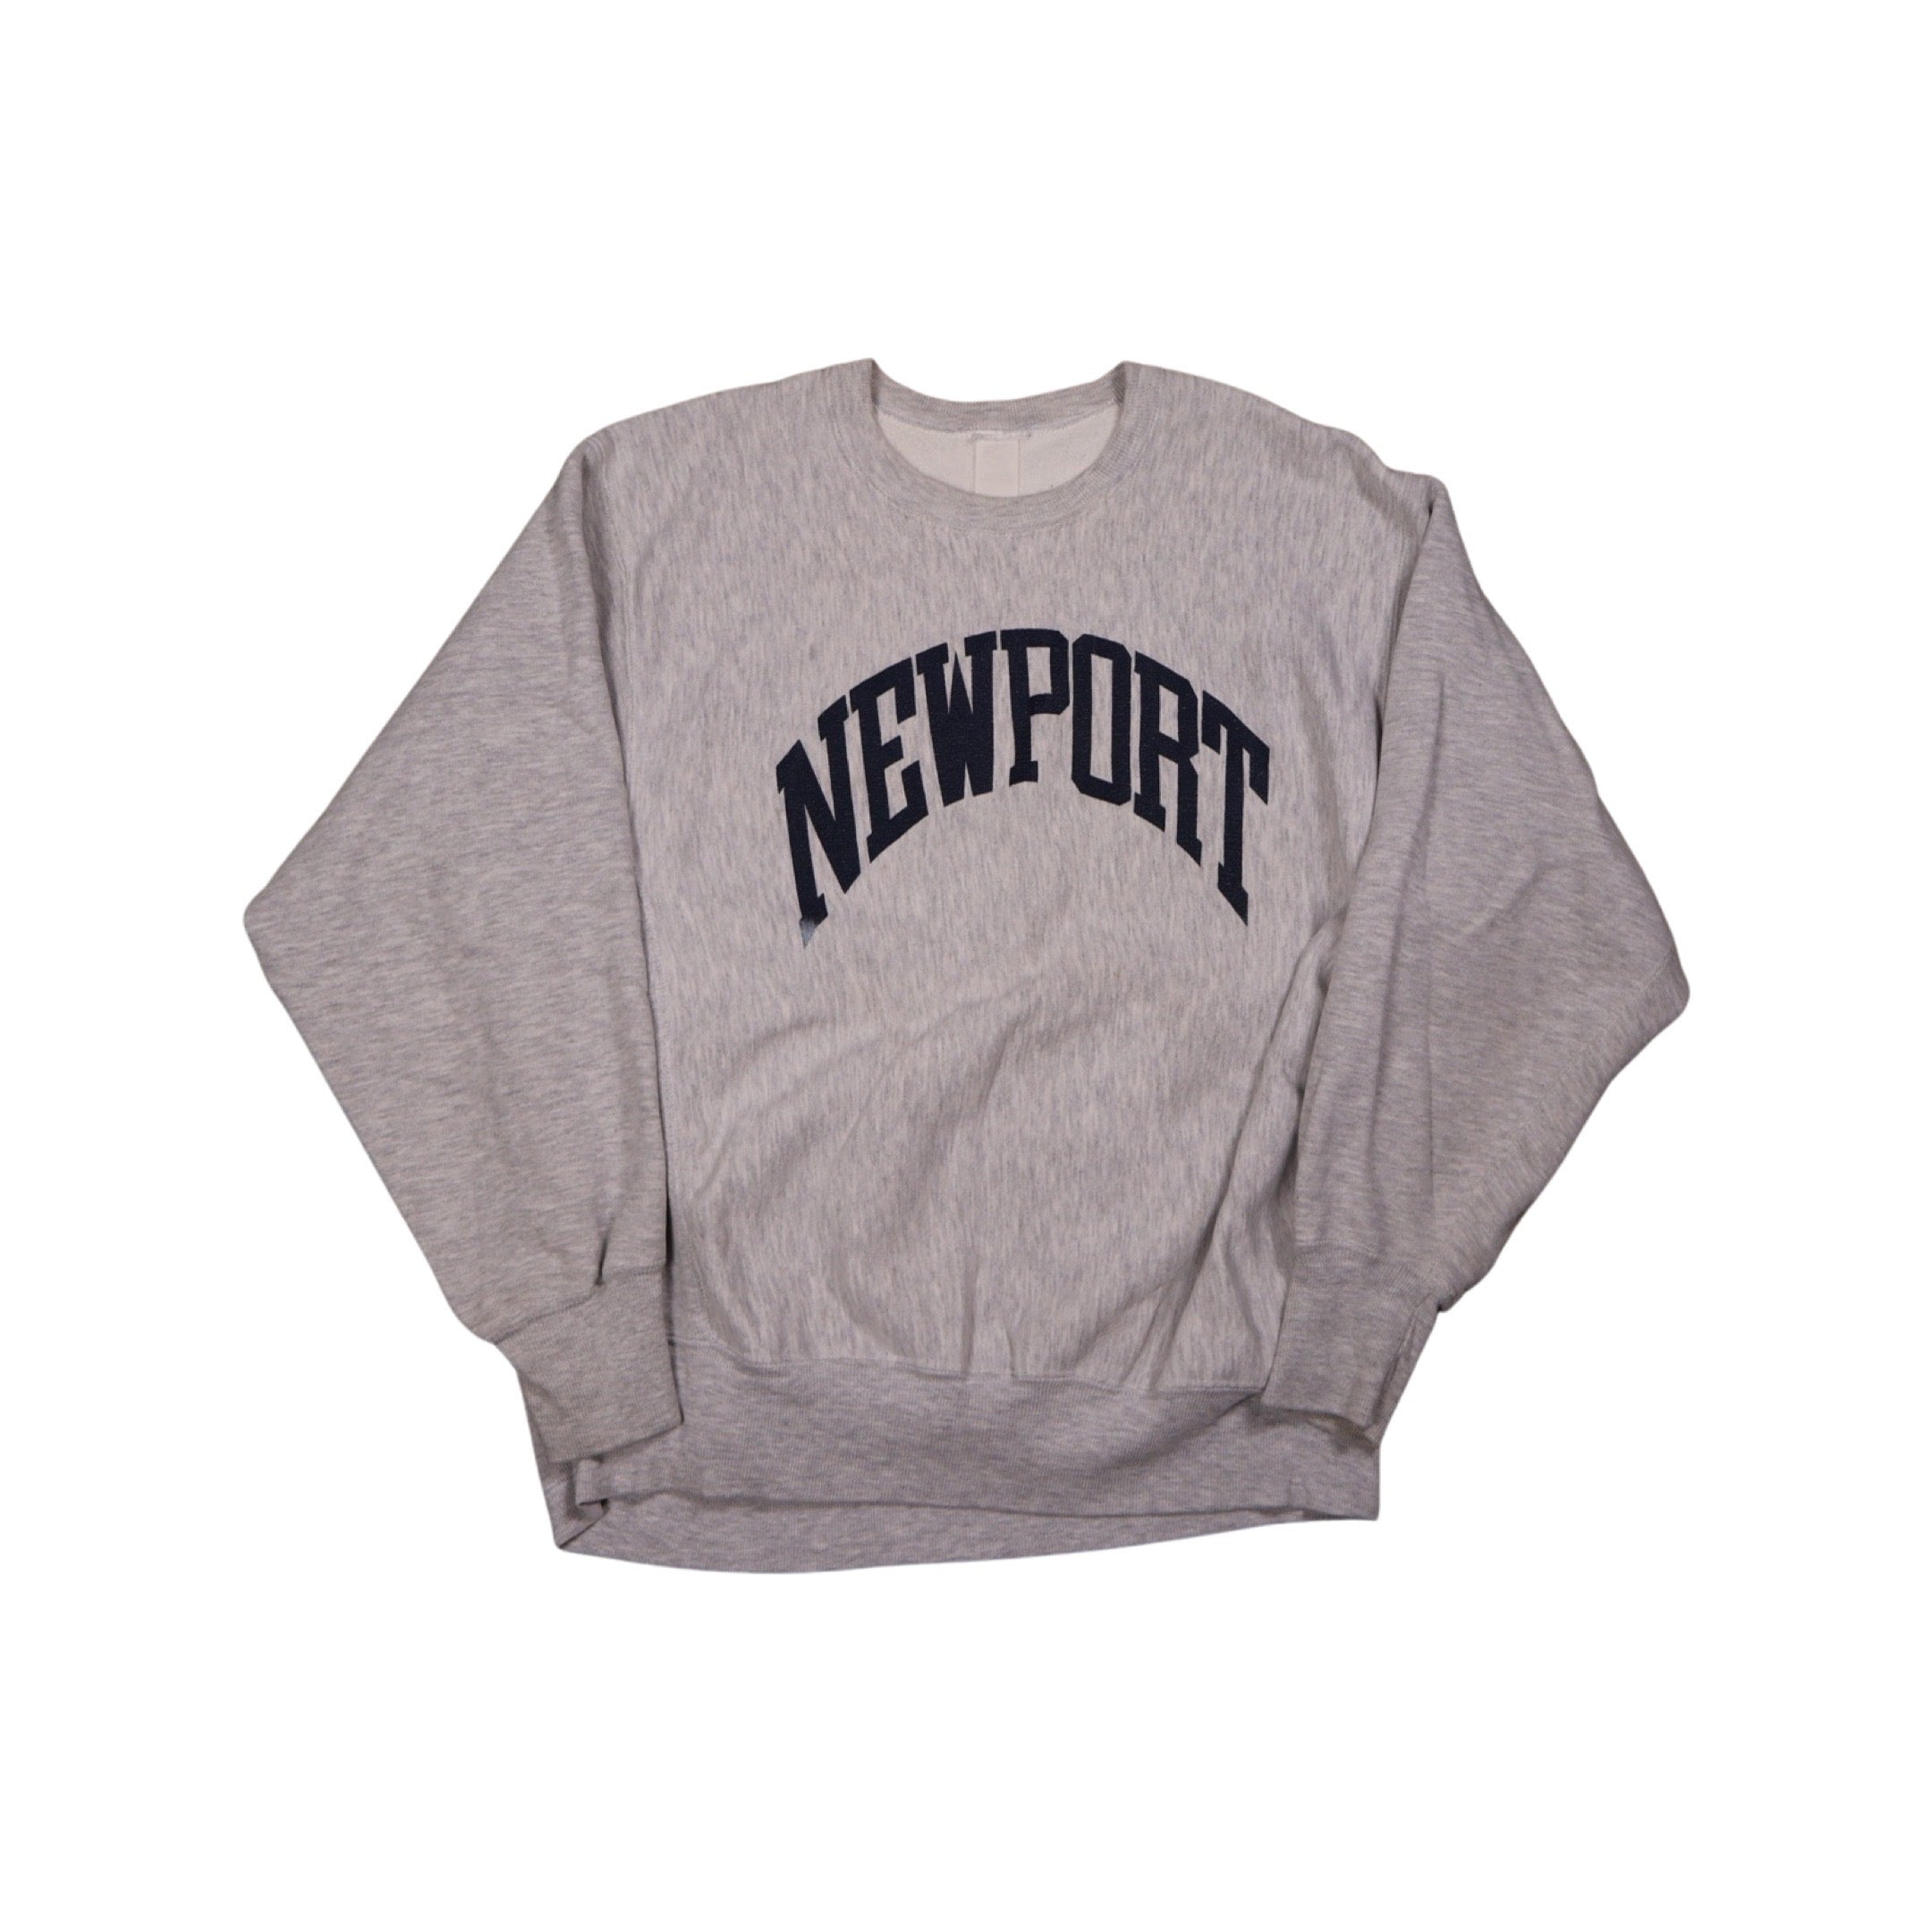 Newport 90s Sweater (XL)